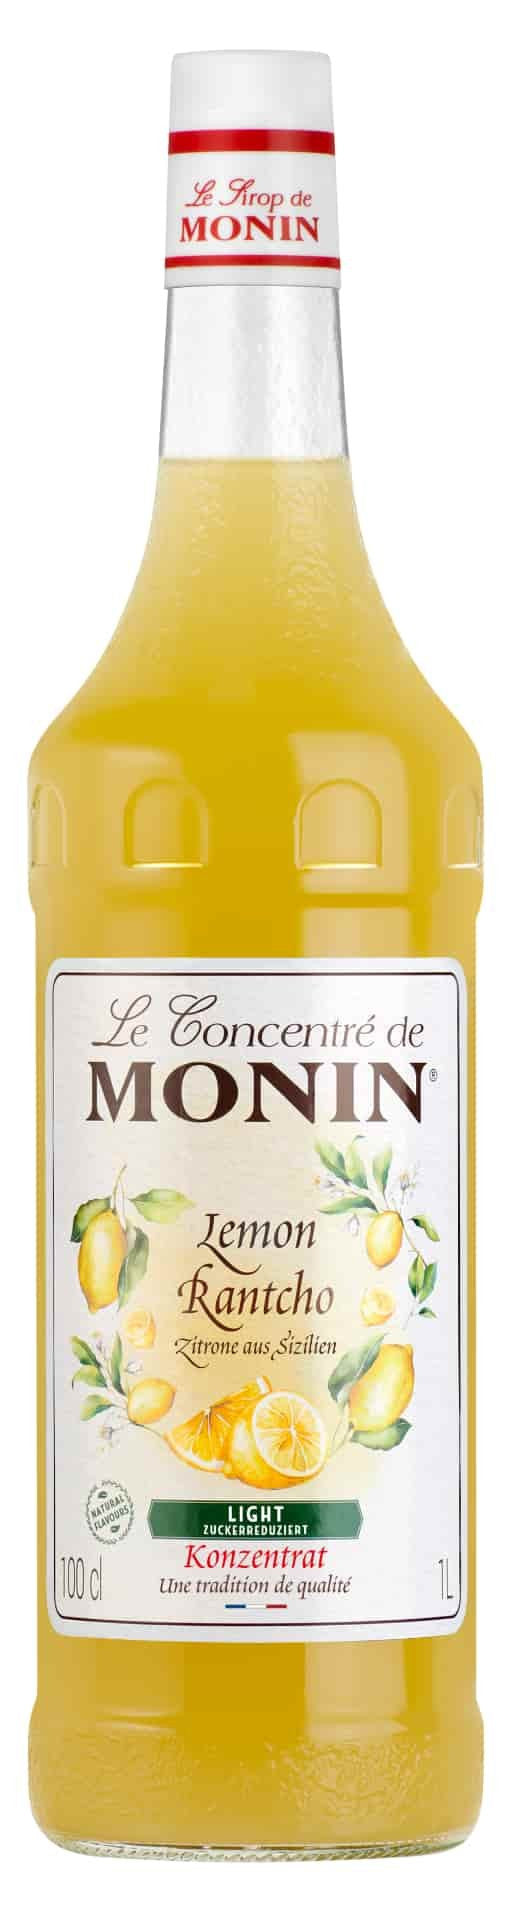 Monin Lemon Rantcho Zitrone Konzentrat 1L